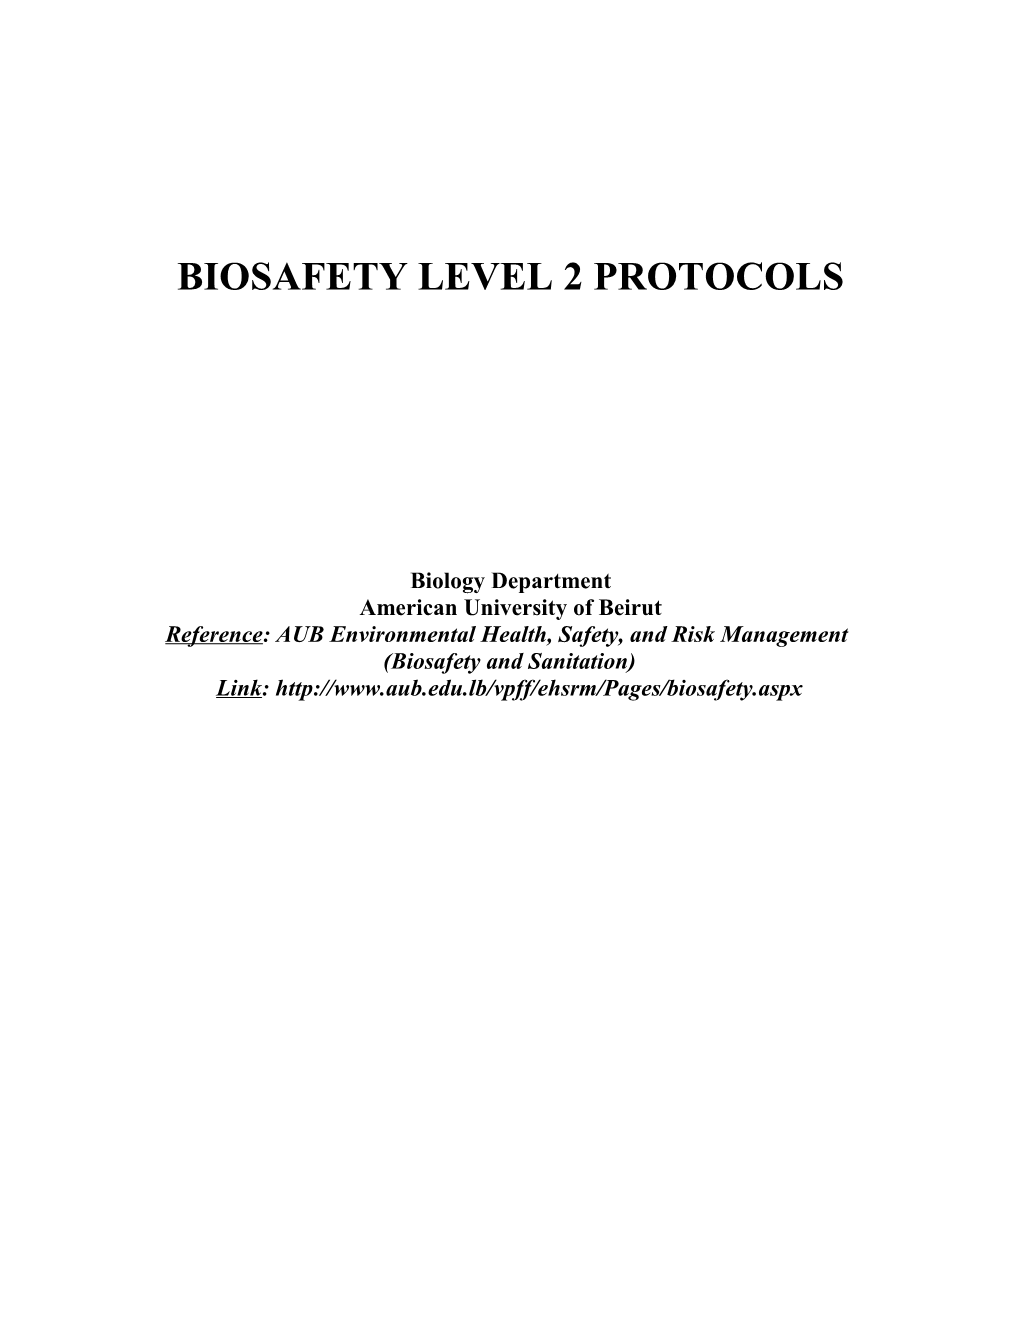 Biosafety Level 2 Protocols